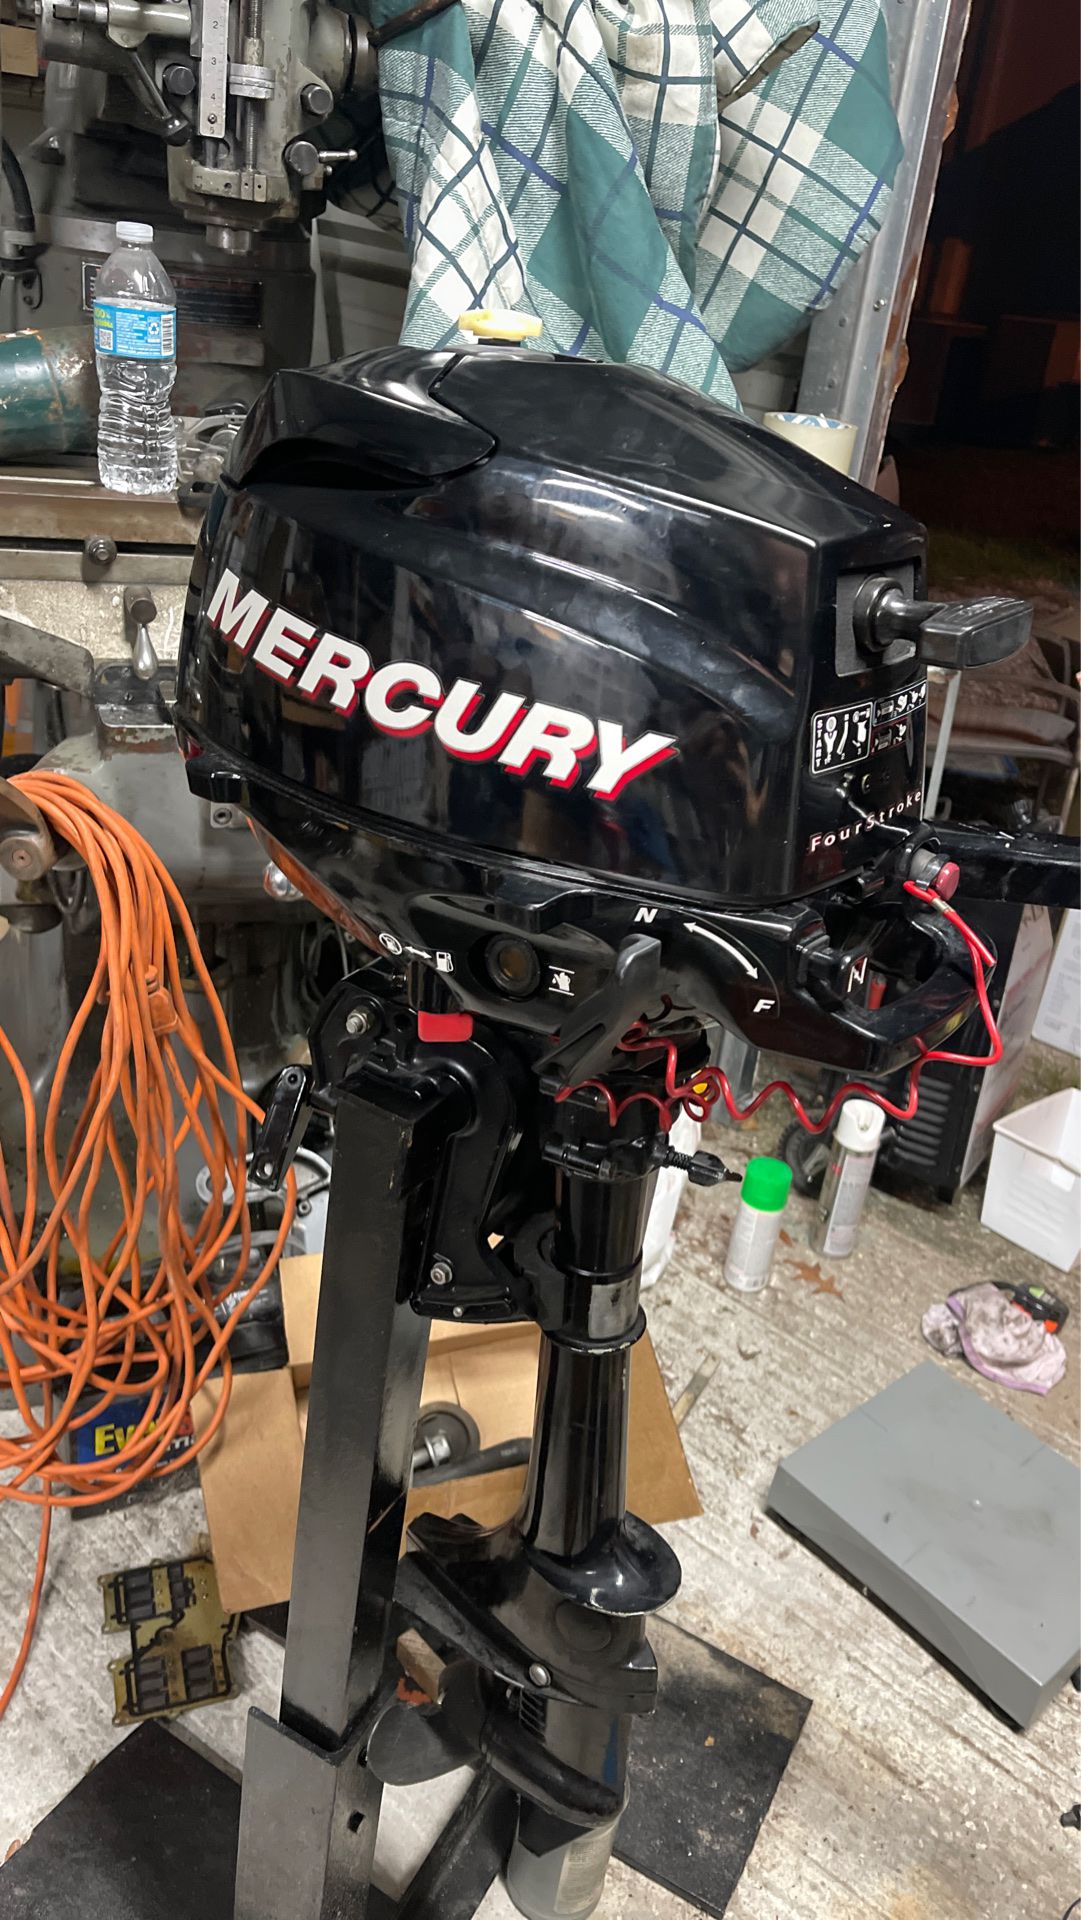 Mercury 3.5hp 4 stroke Outboard Motor Tiller handle.